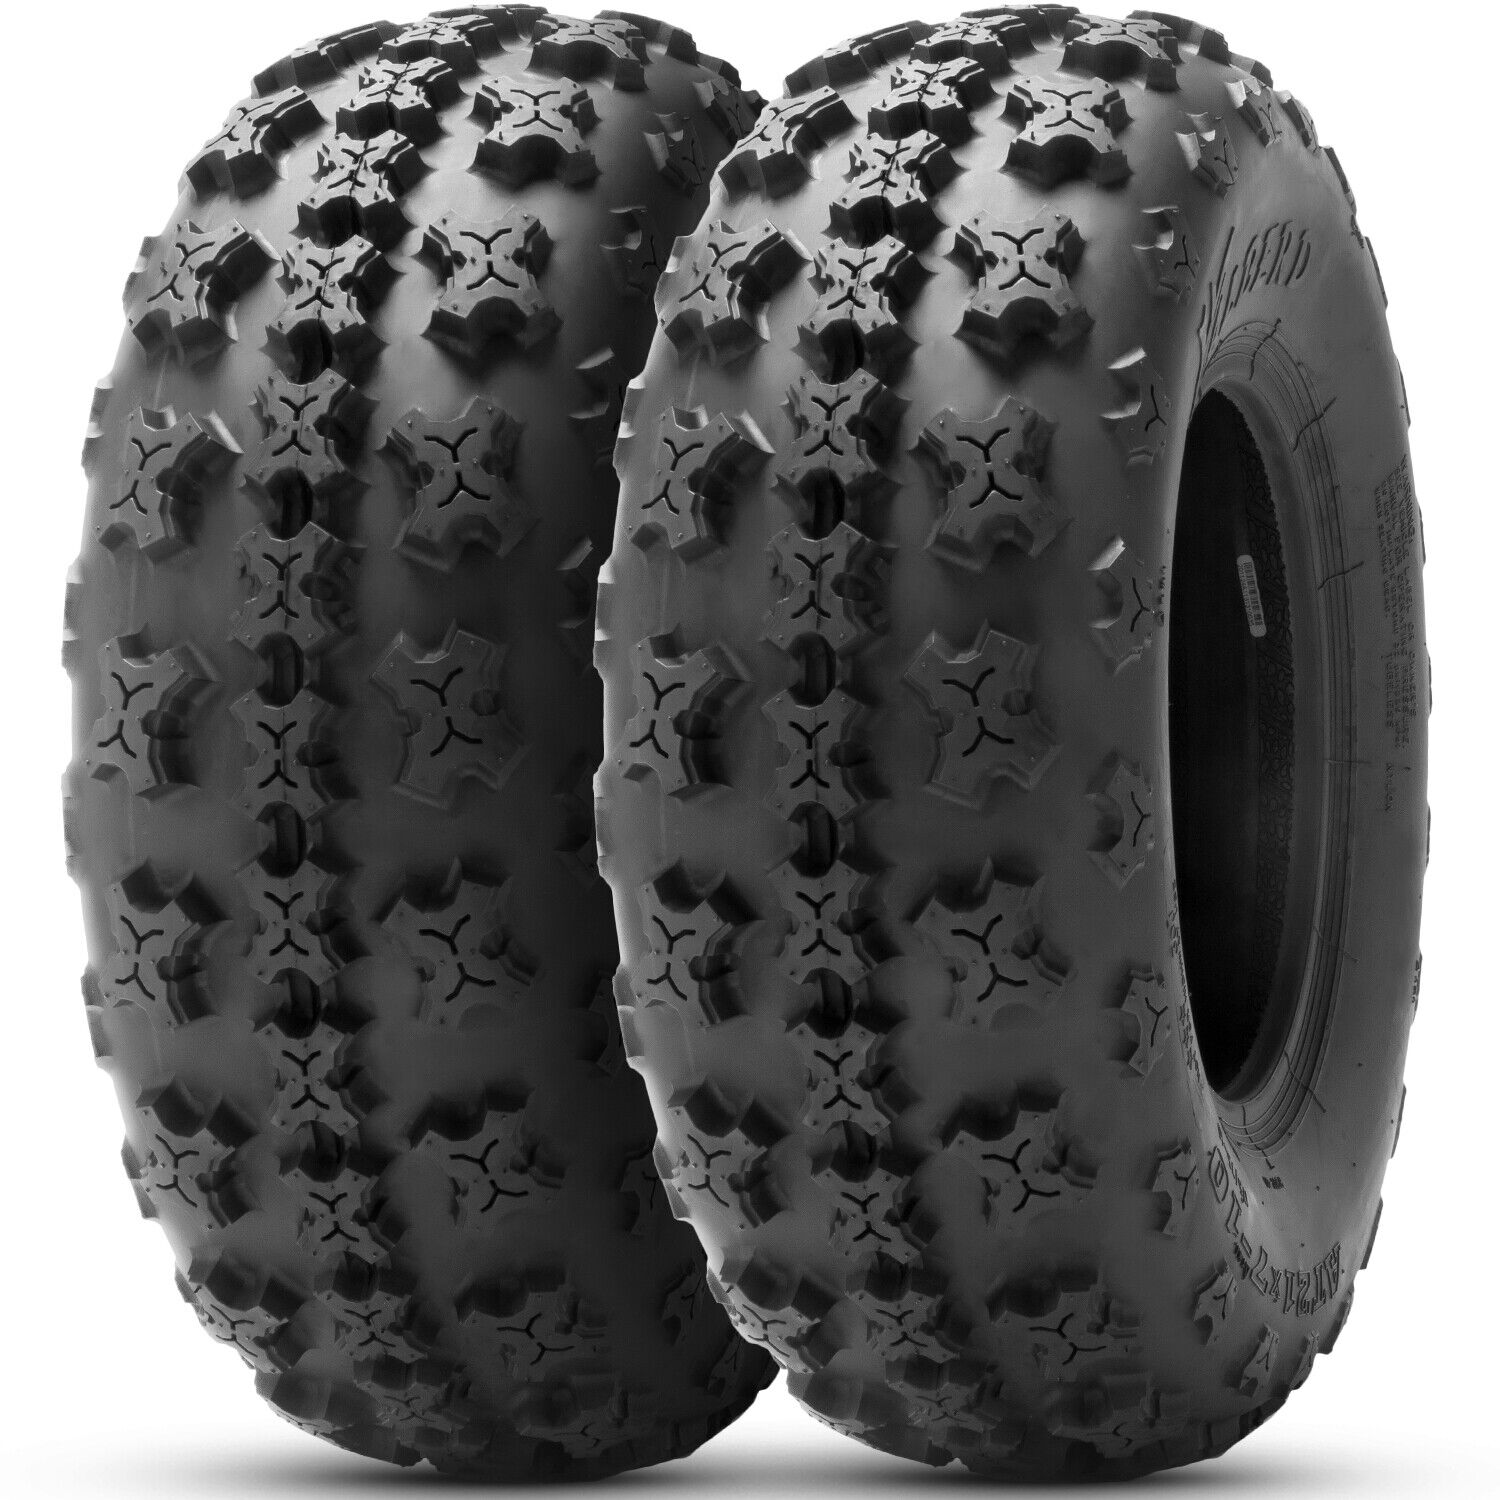 Set 2 21x7-10 Sport Quad ATV Tires 4Ply 21x7x10 Heavy Duty Tubeless Racing Tires